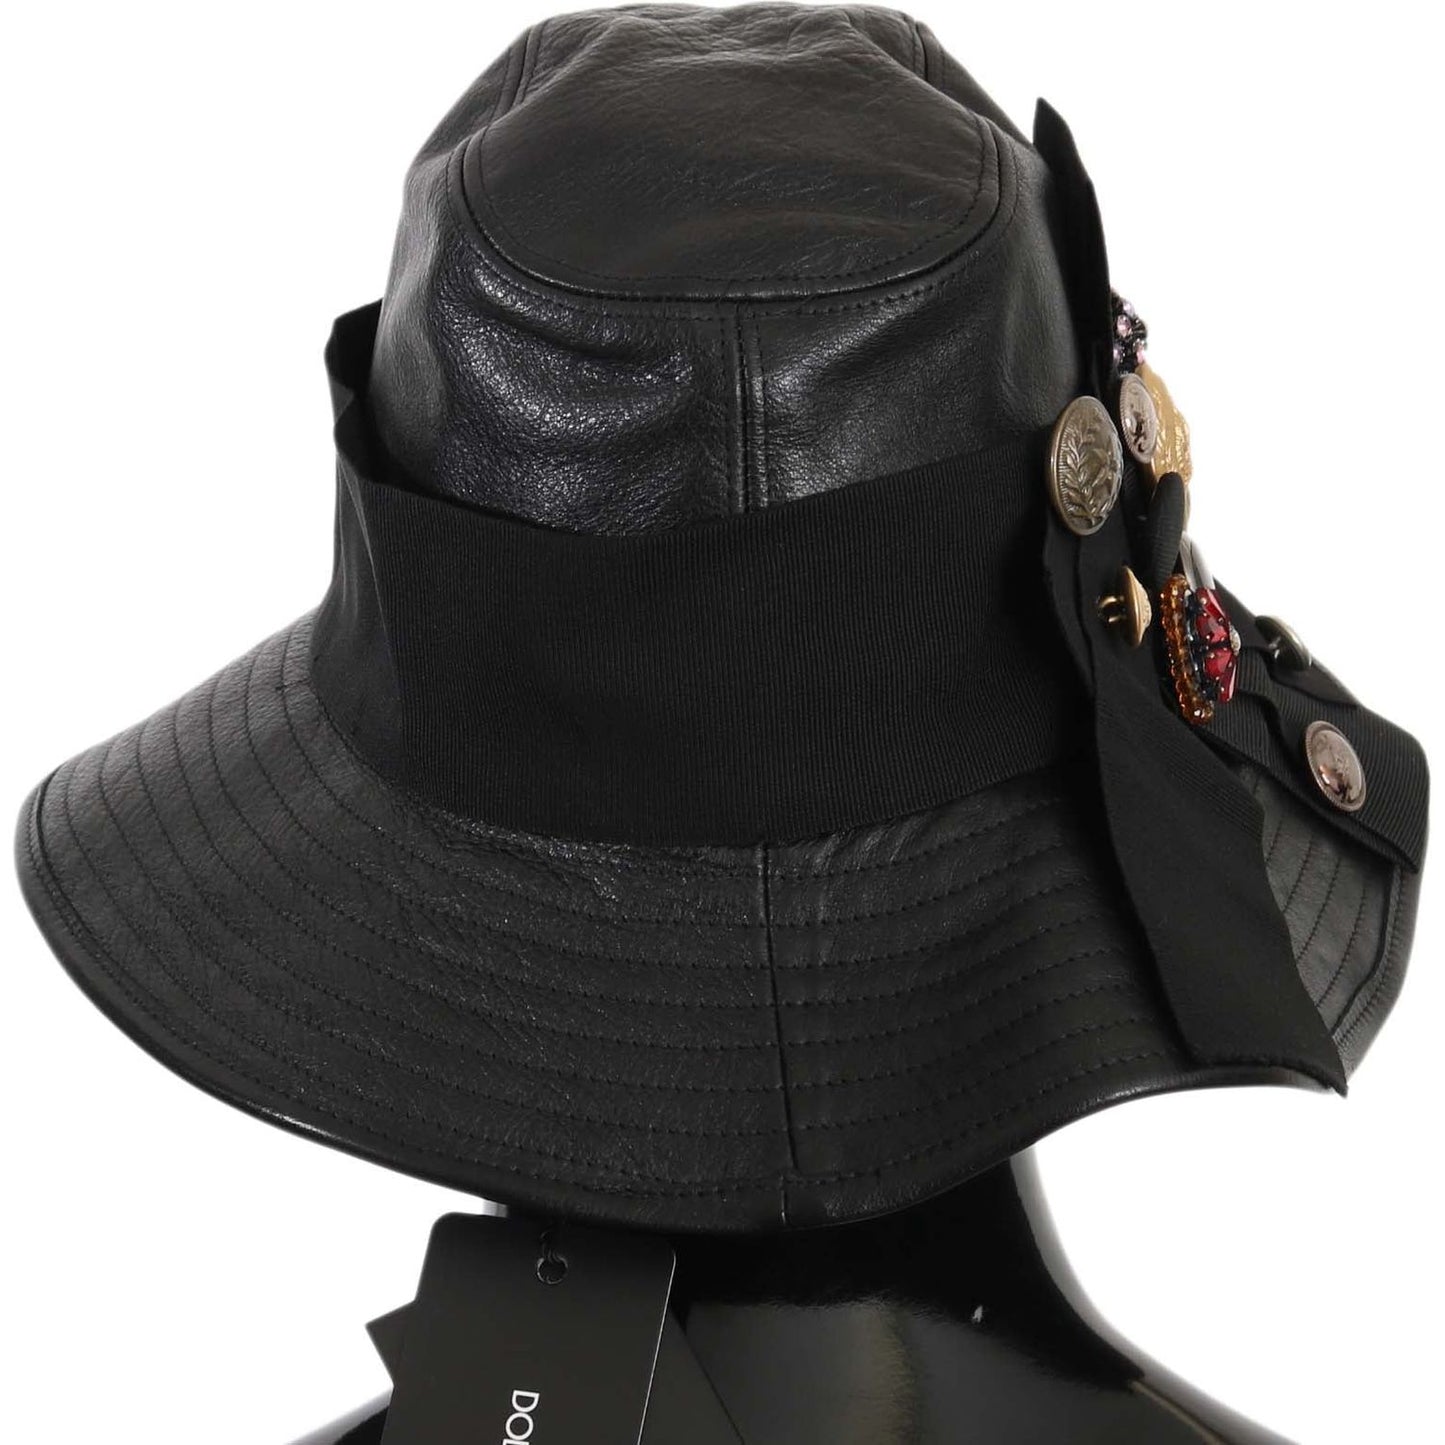 Dolce & Gabbana Black Leather DG Coin Crystal Wide Brim Hat black-leather-dg-coin-crystal-wide-brim-hat Hat IMG_0144-2.jpg